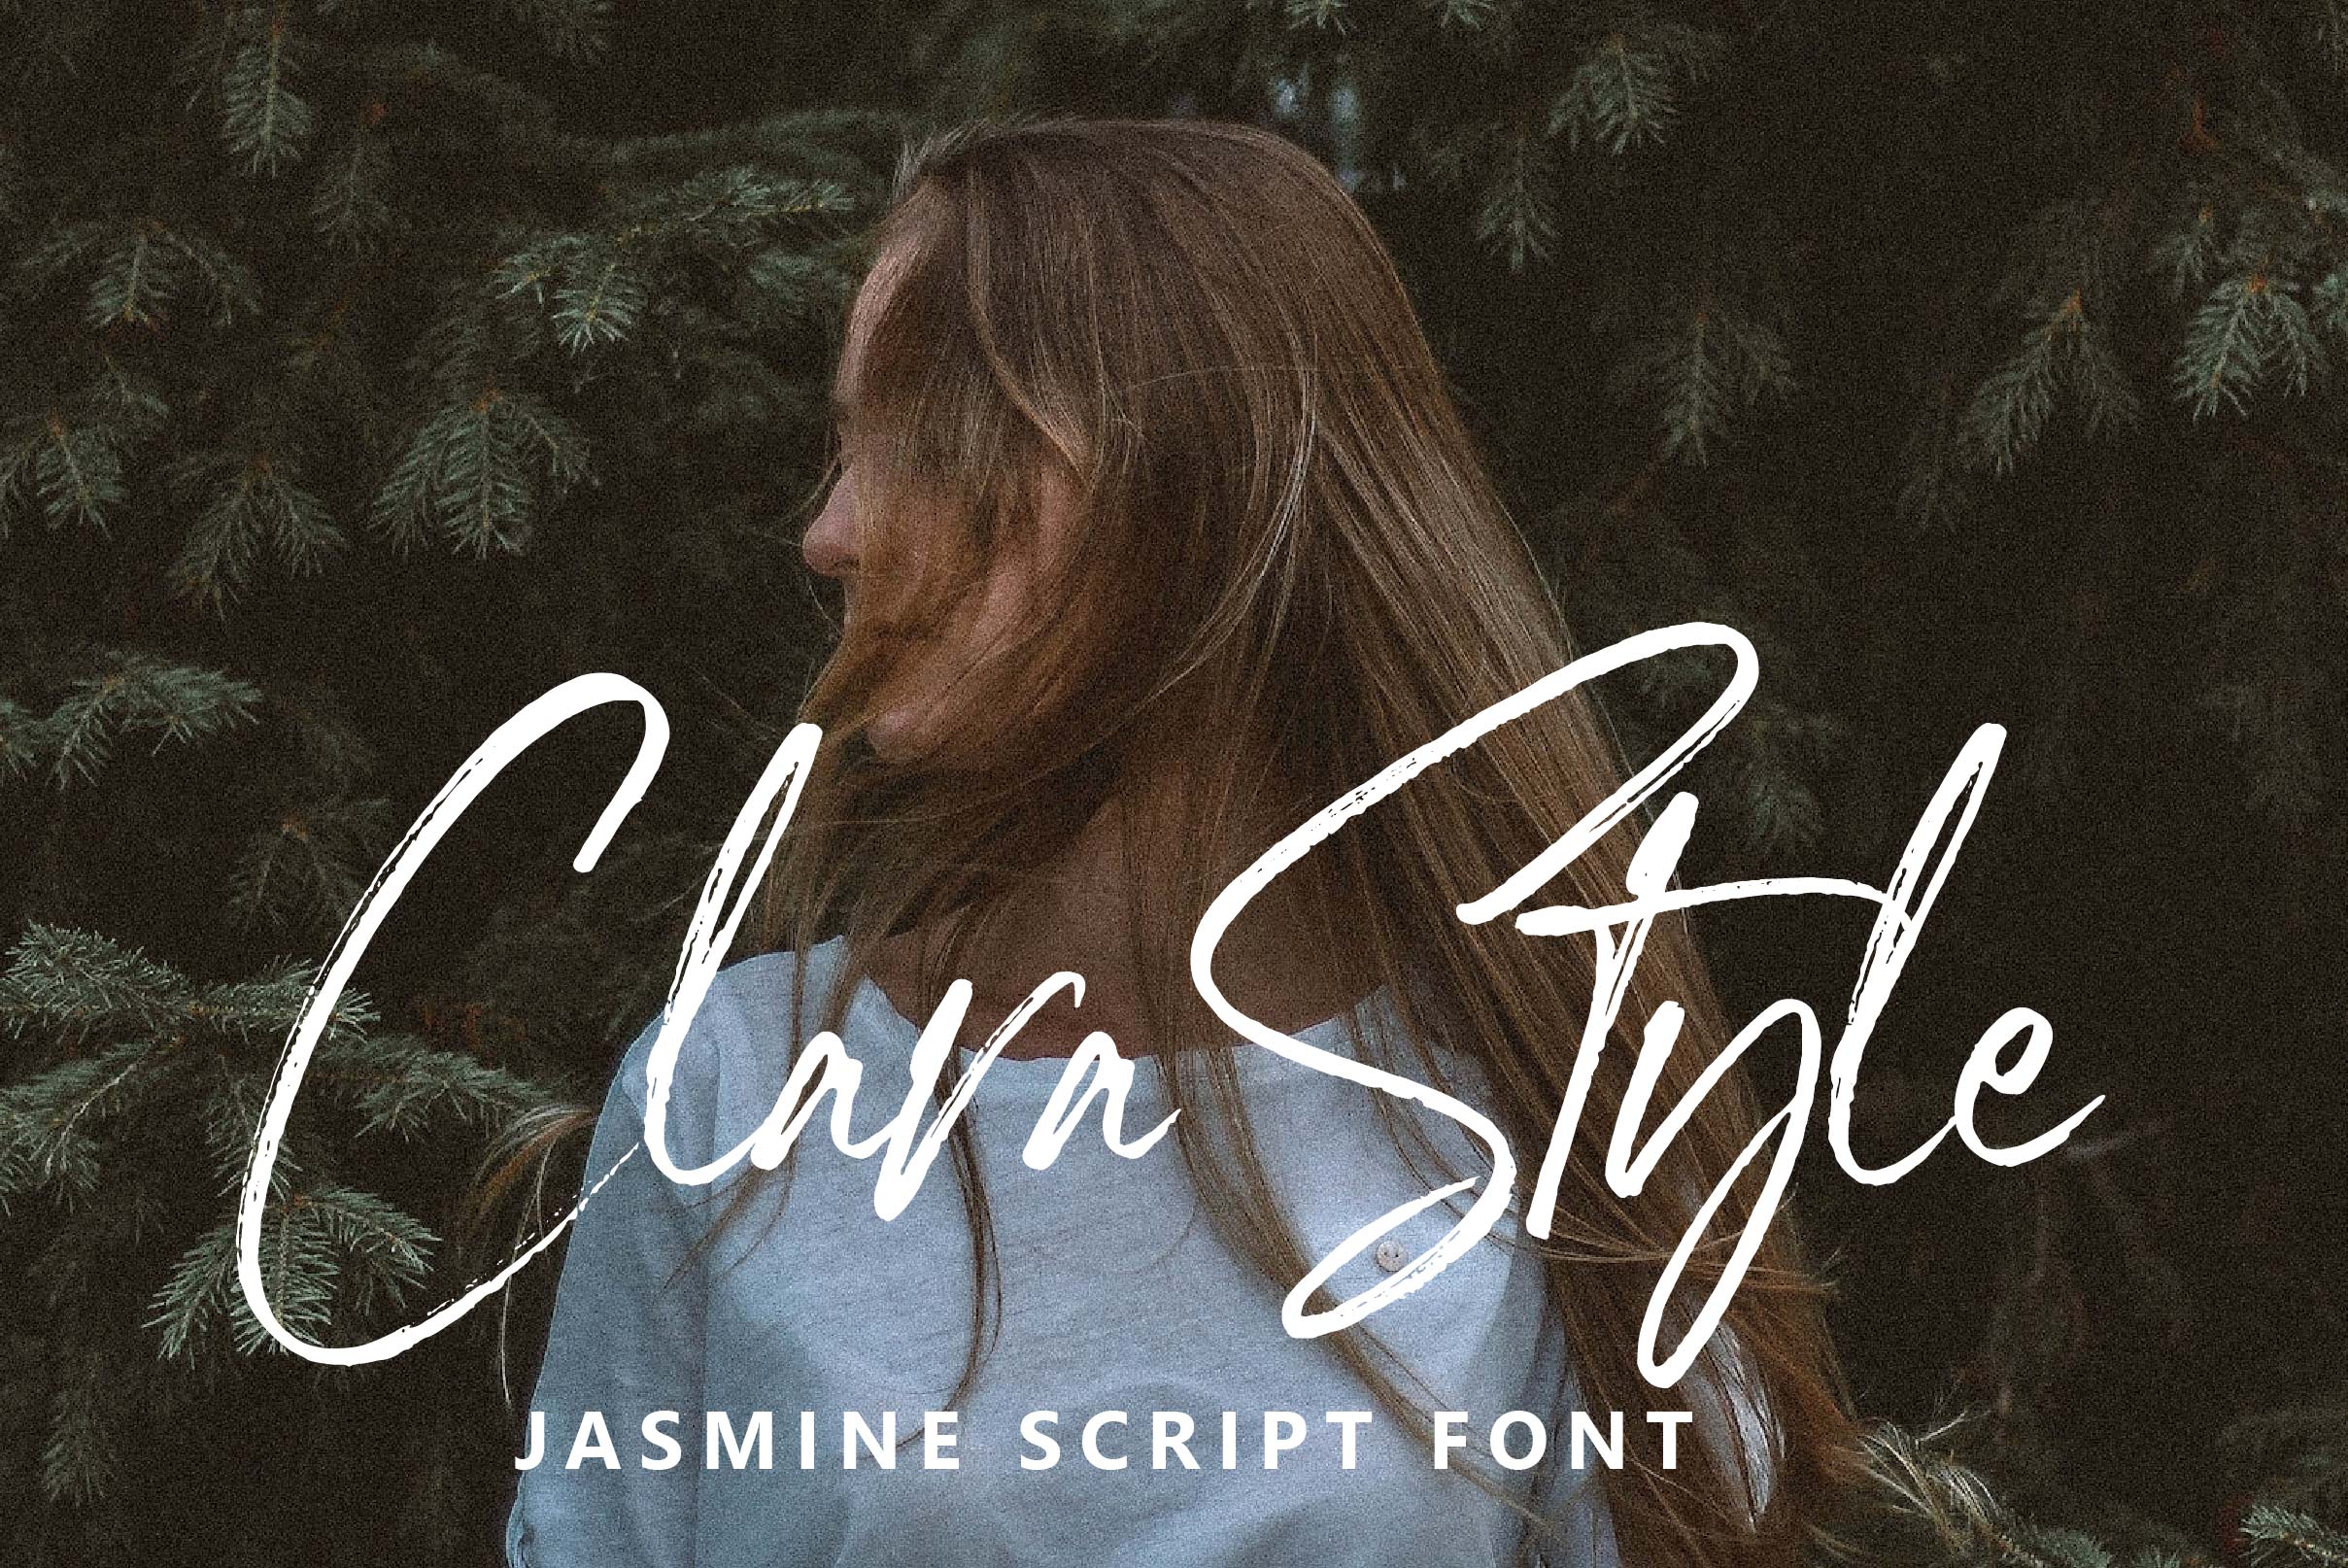 Jasmine Script